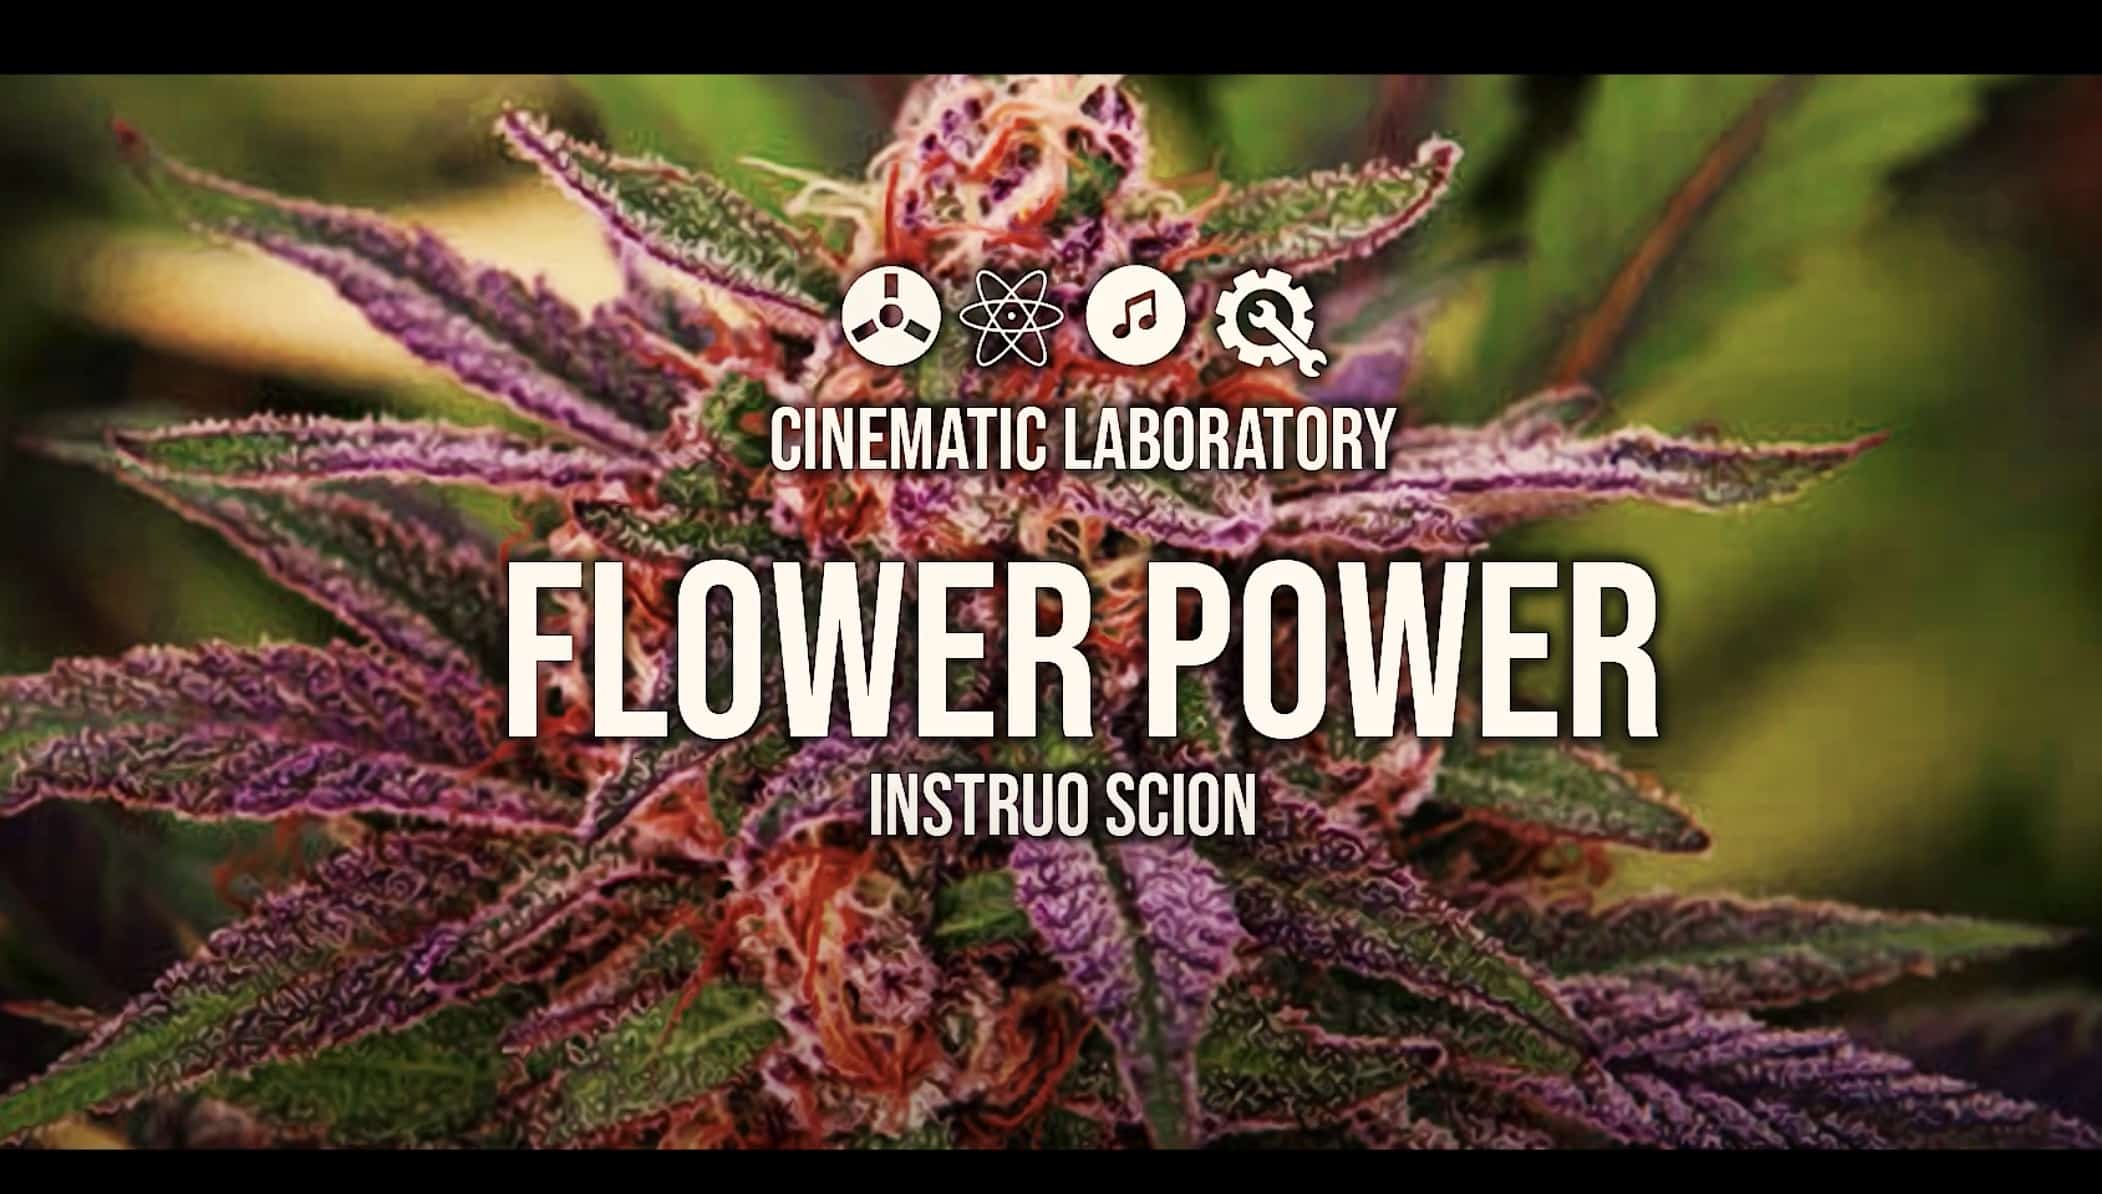 FlowerPower – Instruo #Scion